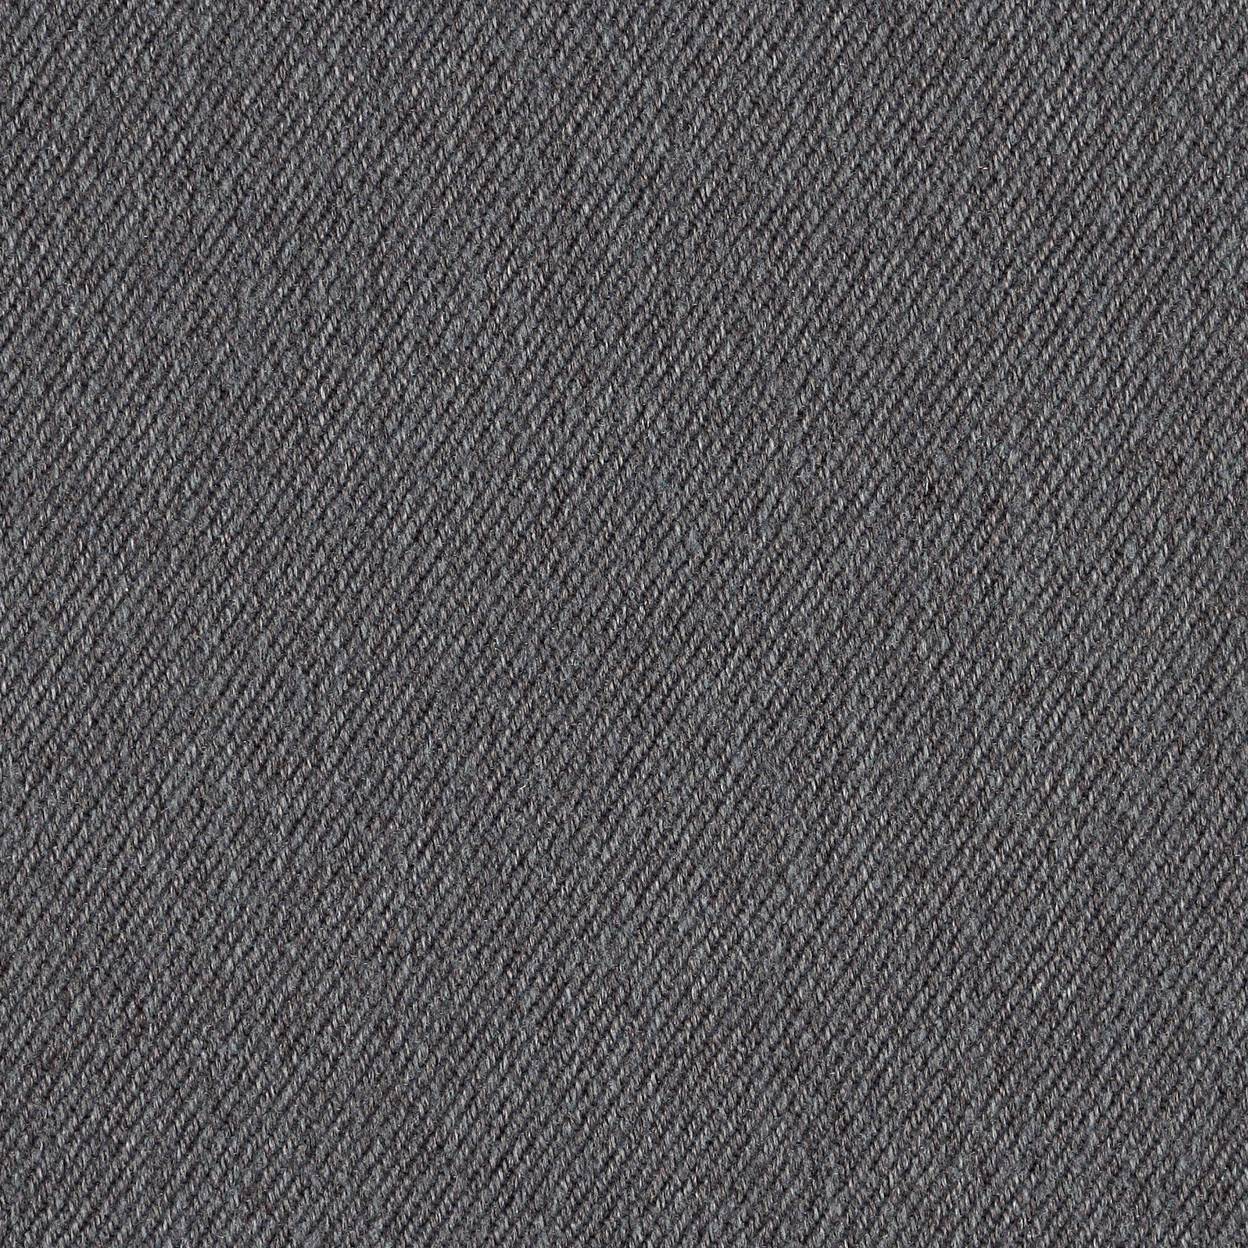 Carbon - Whisper - Textiles - Materials - Herman Miller